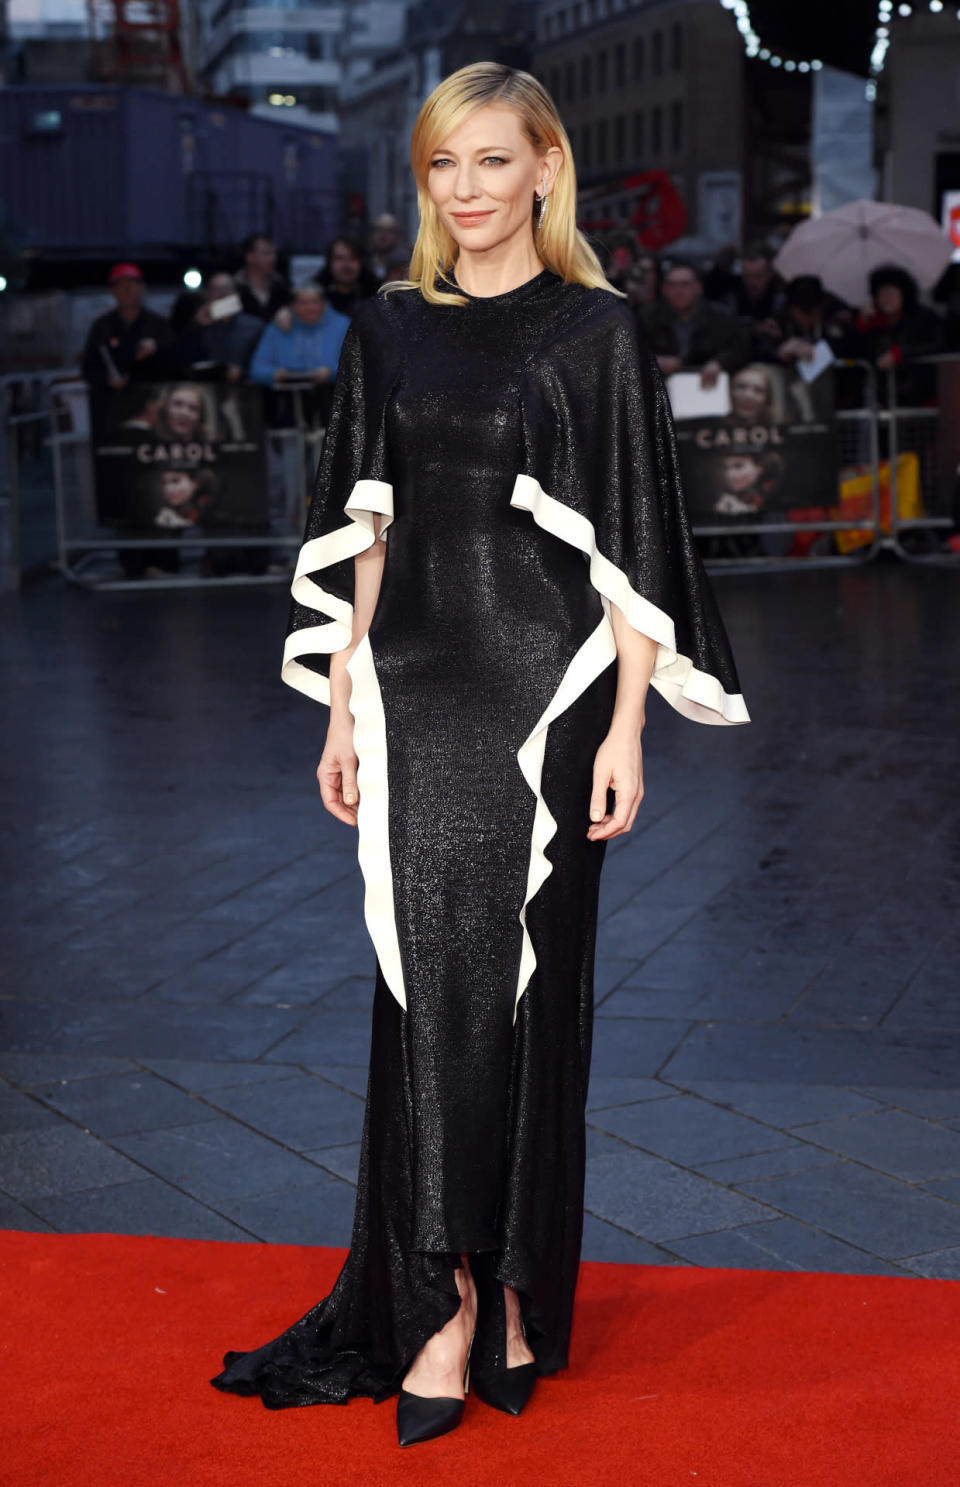 Cate Blanchett in Esteban Cortázar at the Carol London premiere, October 2015